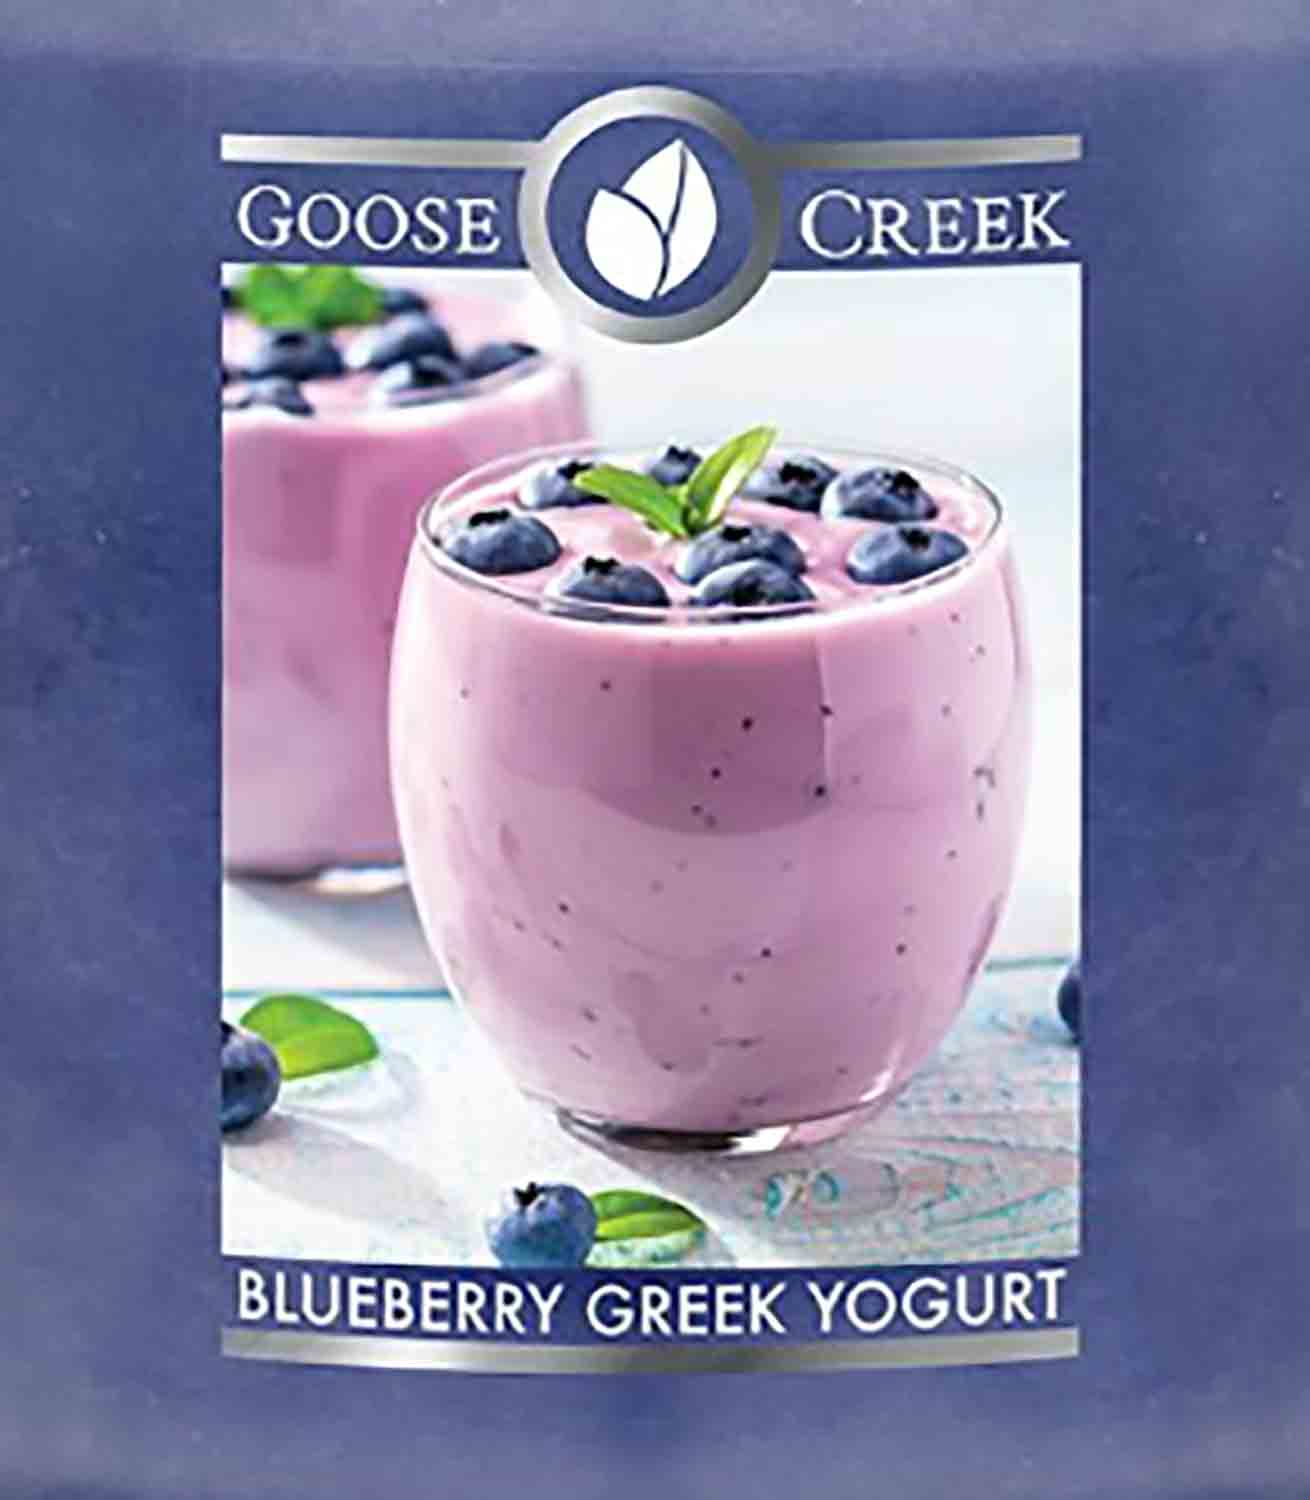 Goose Creek Blueberry Greek Yogurt 22g - Crumble vosk